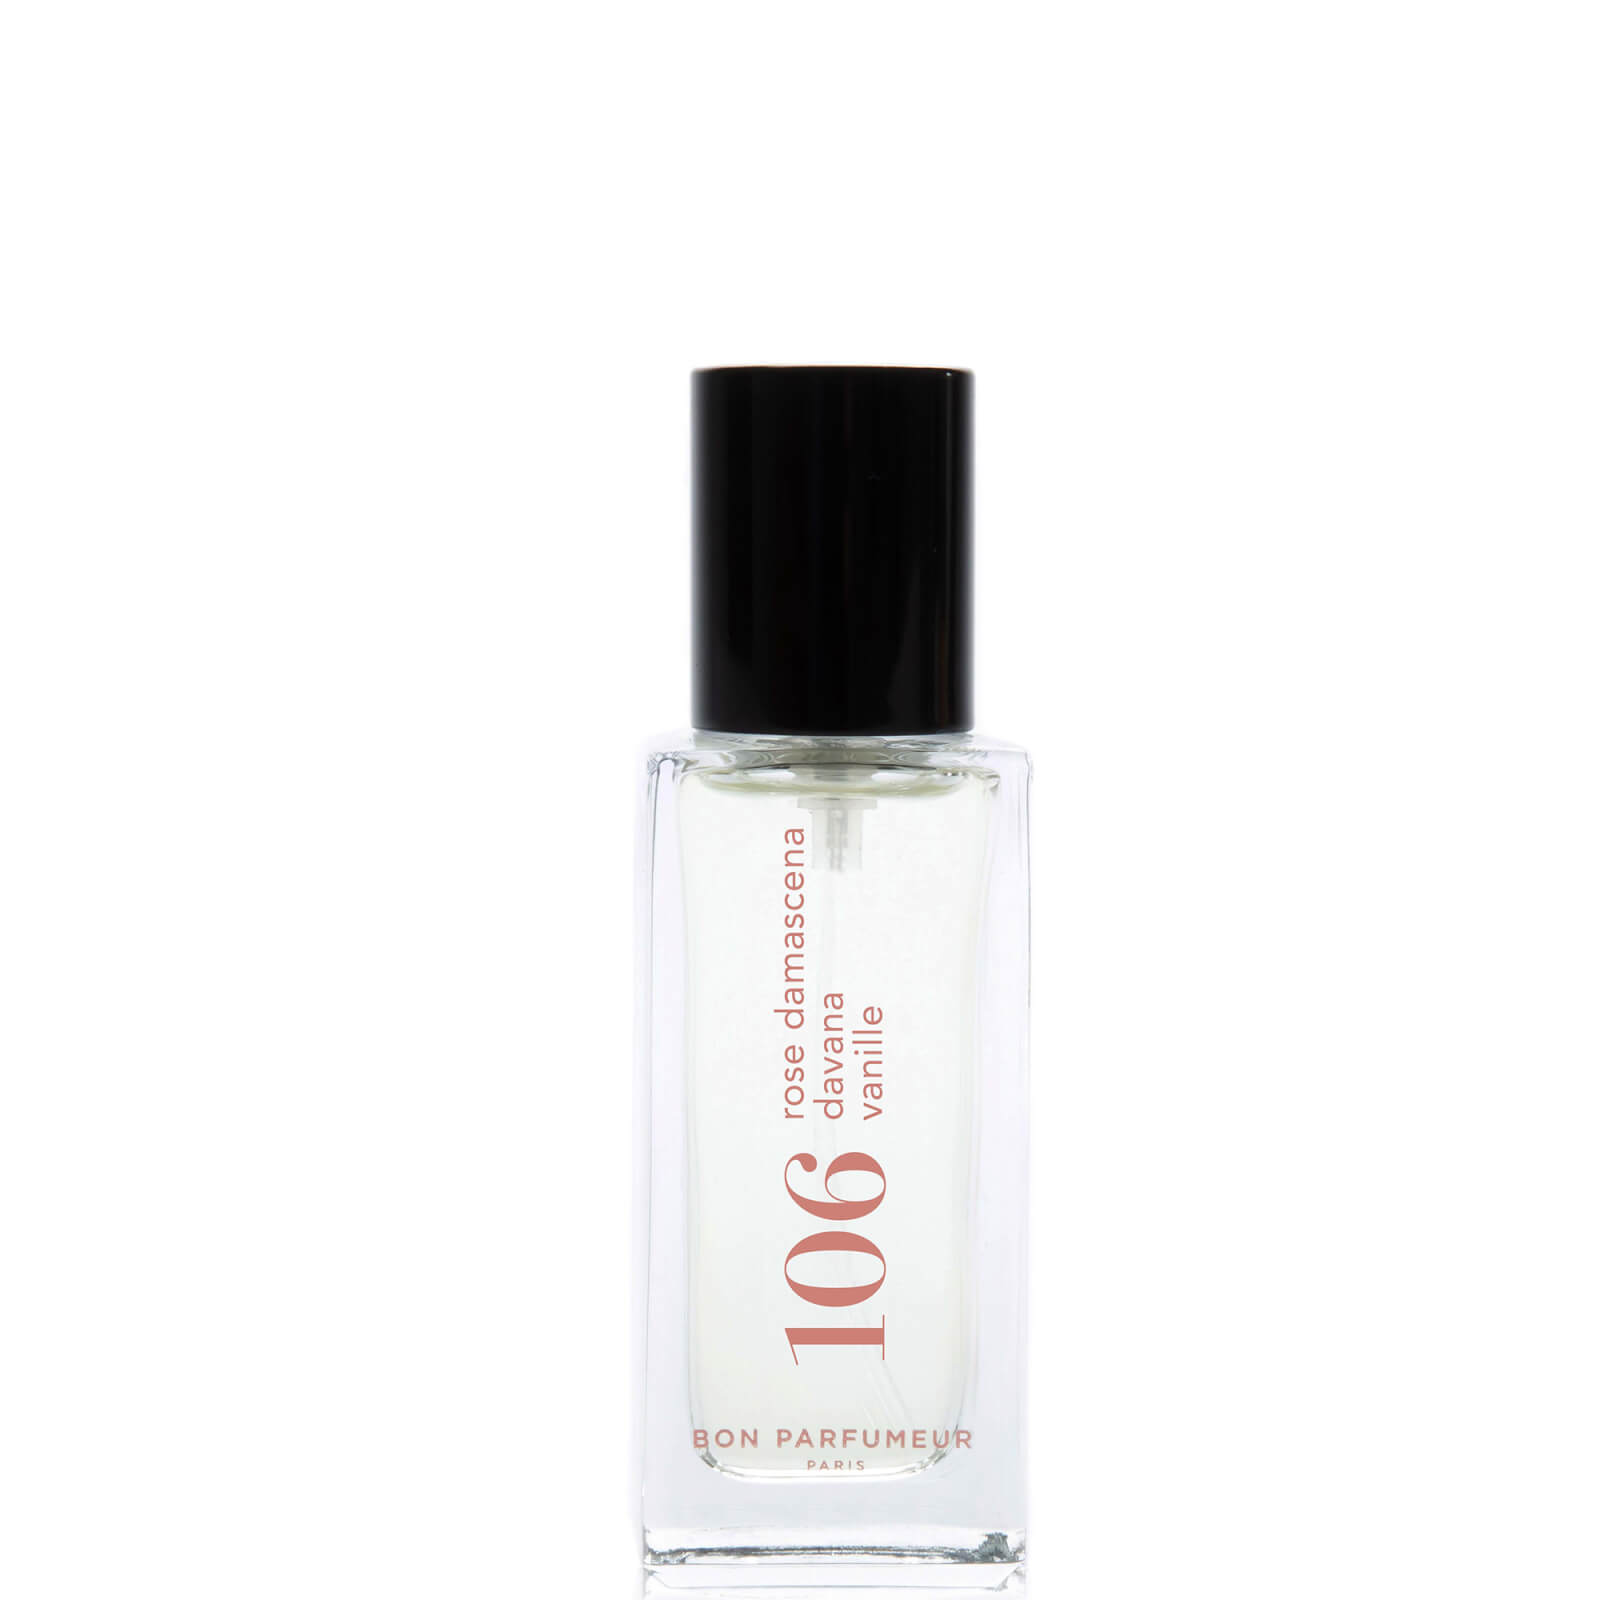 Photos - Women's Fragrance Bon Parfumeur 106 Damascena Rose, Davana, Vanilla Eau de Parfum 15ml BP106 